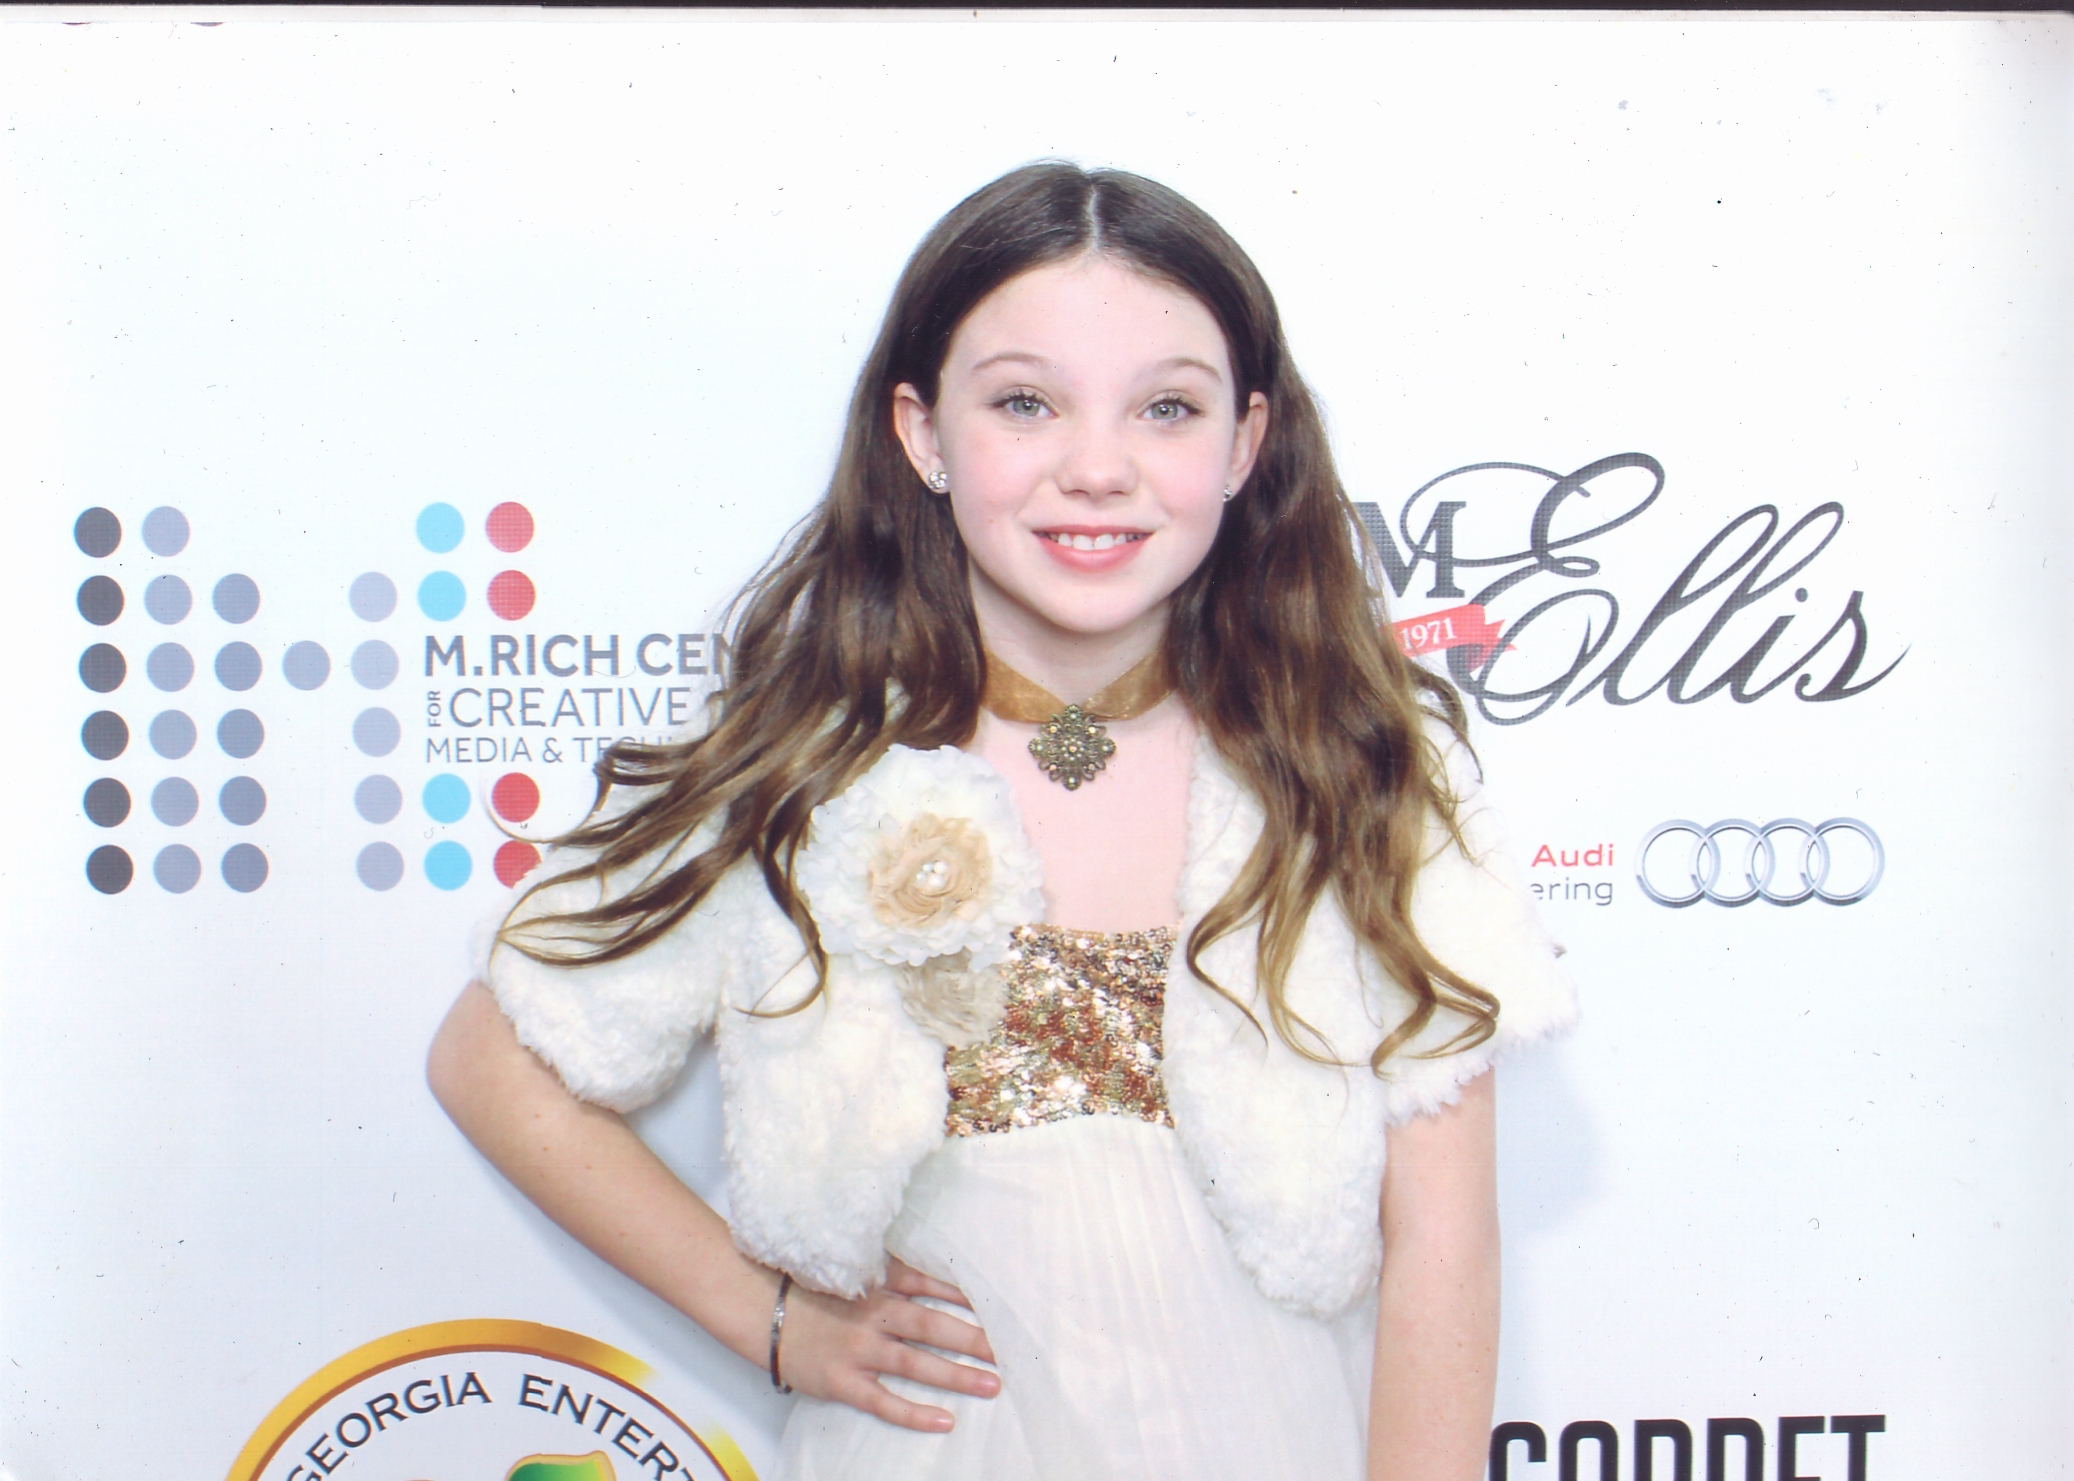 2015 Georgia Entertainment Gala Nominee Youth Artist Award